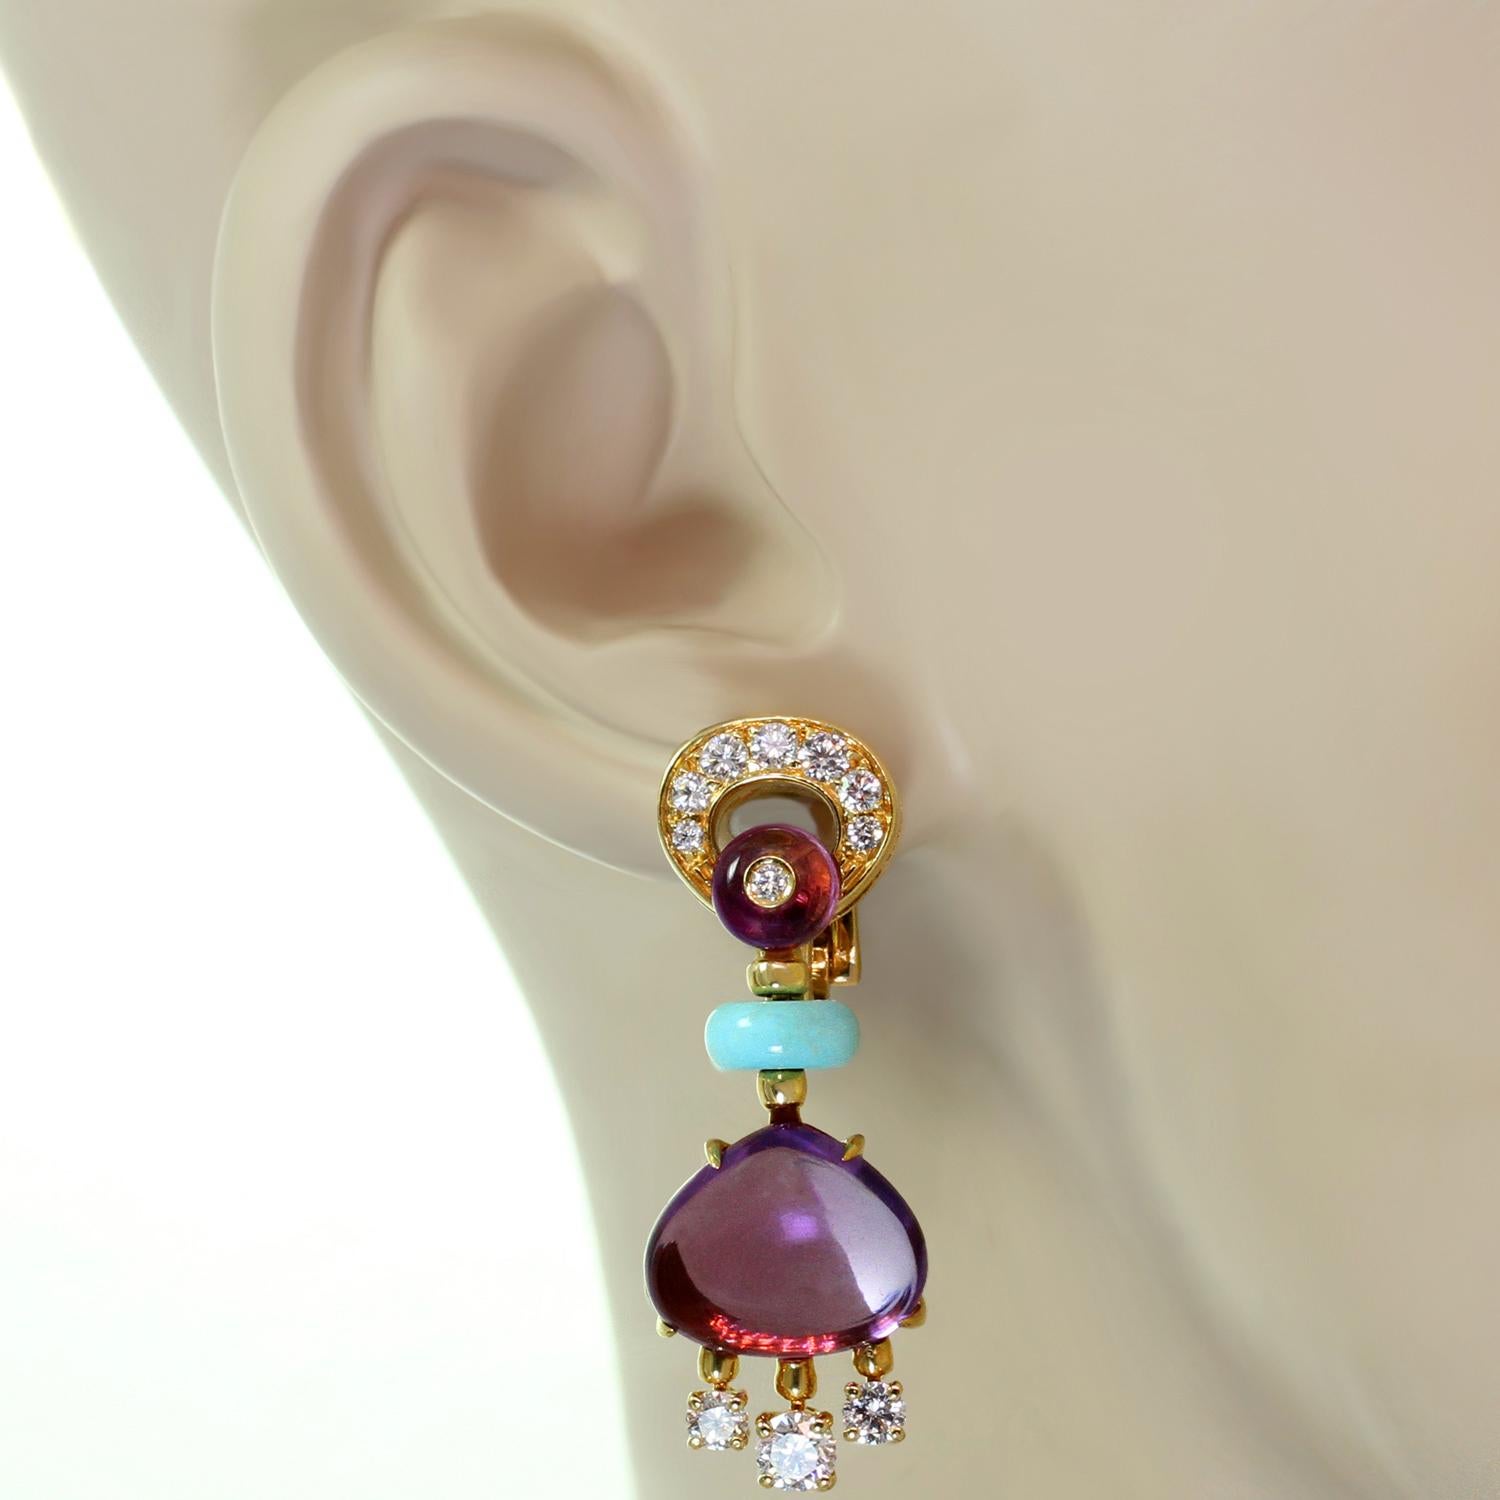 bvlgari turquoise earrings